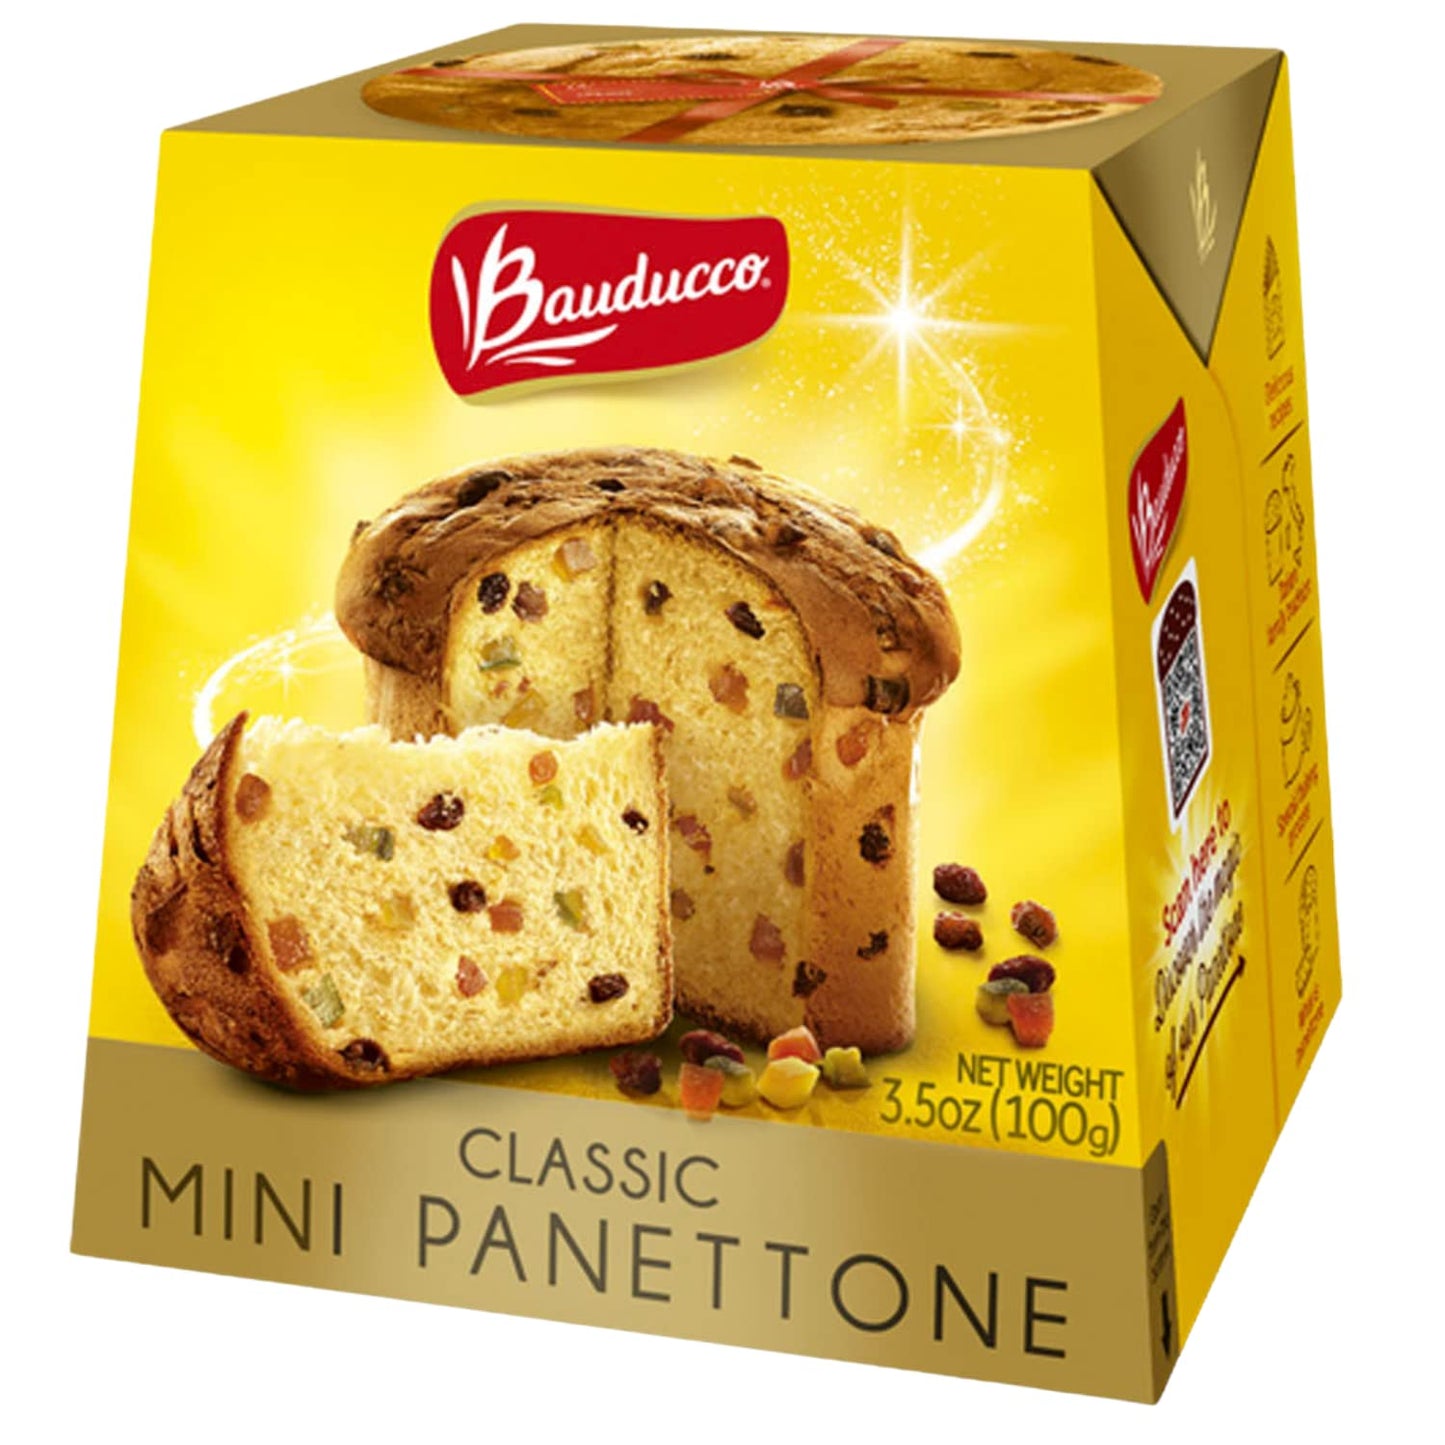 Bauducco Mini Panettone Classic - Moist & Fresh Holiday Cake - Traditional Italian Recipe With Candied Fruit & Raisins - 3.5oz